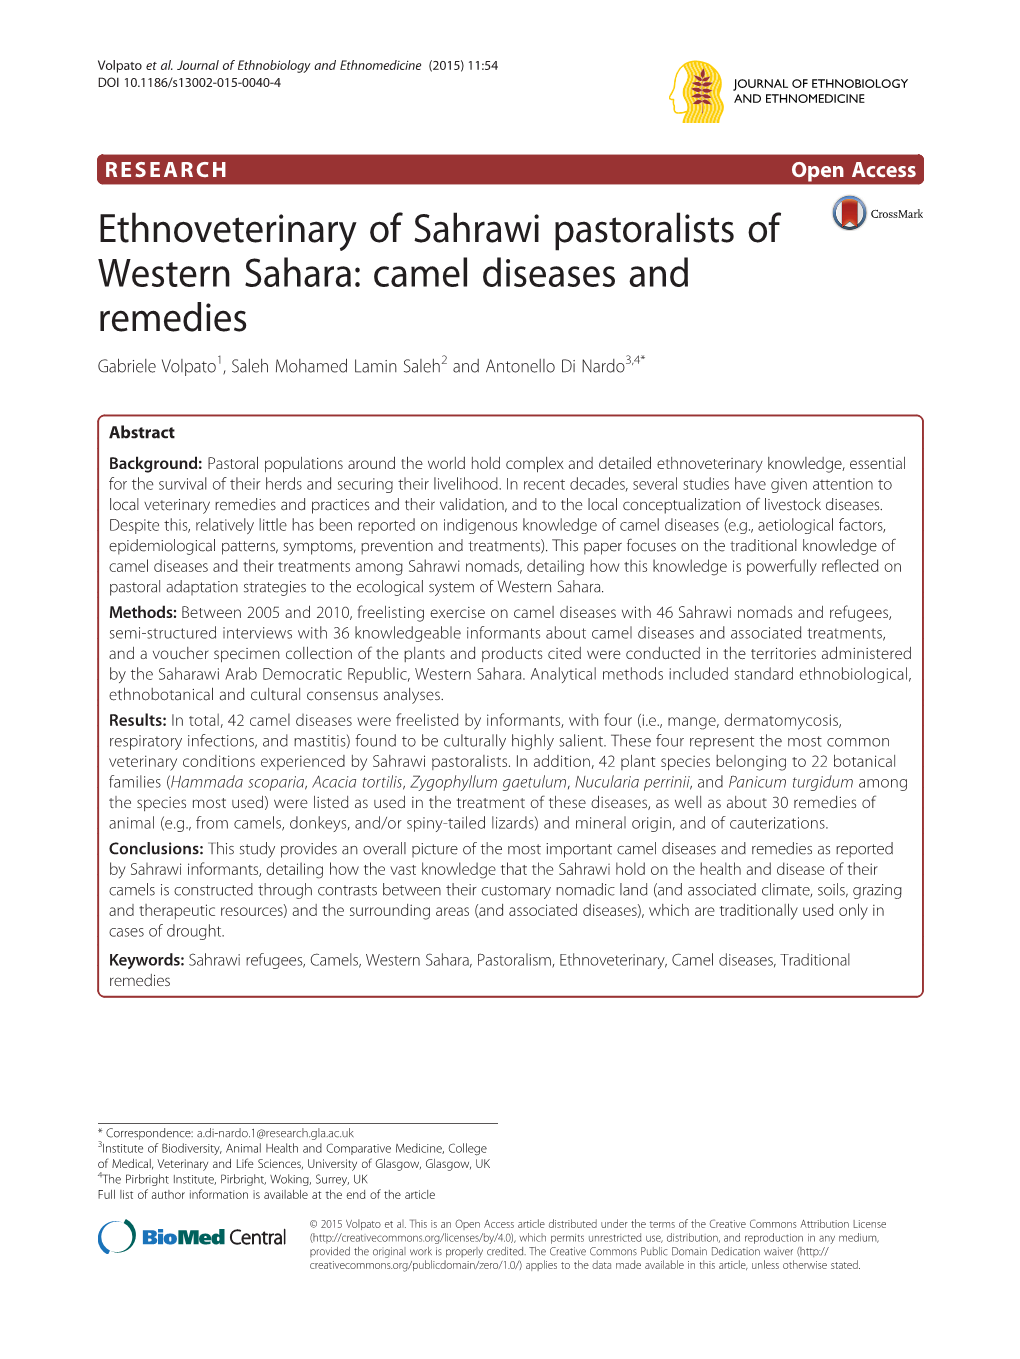 Ethnoveterinary of Sahrawi Pastoralists of Western Sahara: Camel Diseases and Remedies Gabriele Volpato1, Saleh Mohamed Lamin Saleh2 and Antonello Di Nardo3,4*